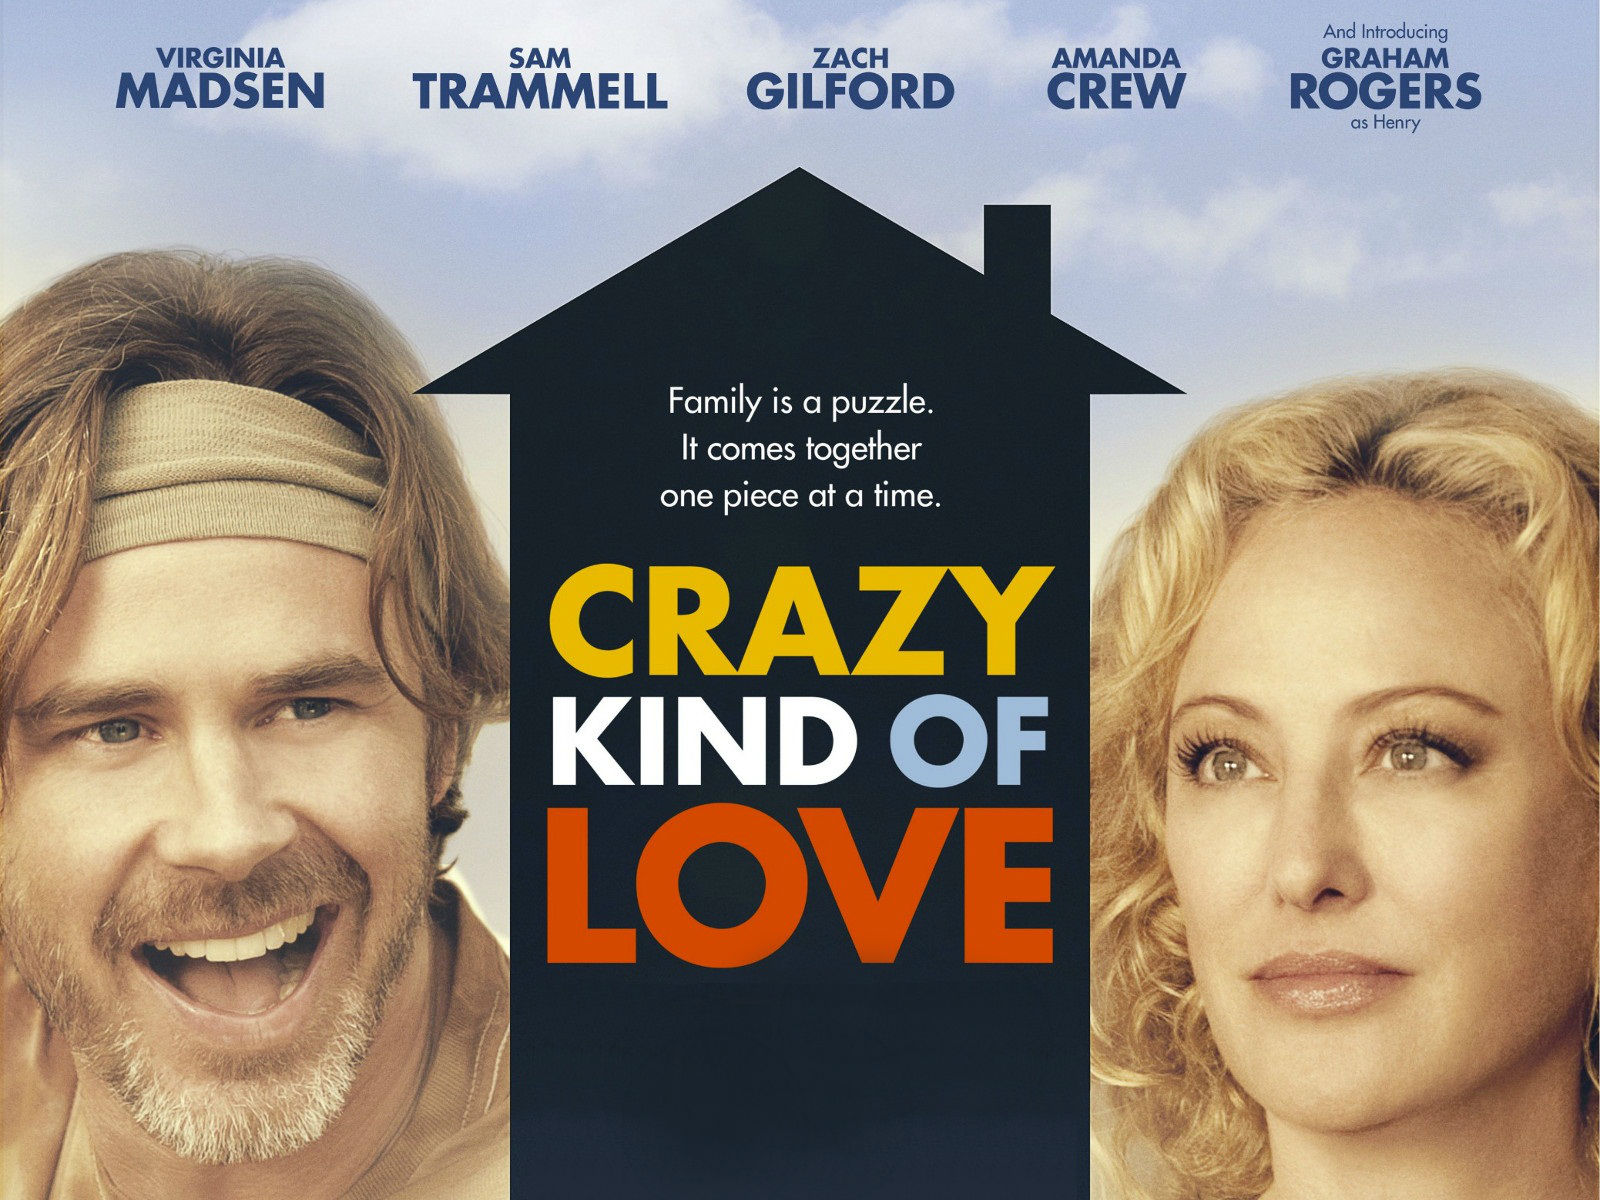 Crazy Kind of Love (2013)